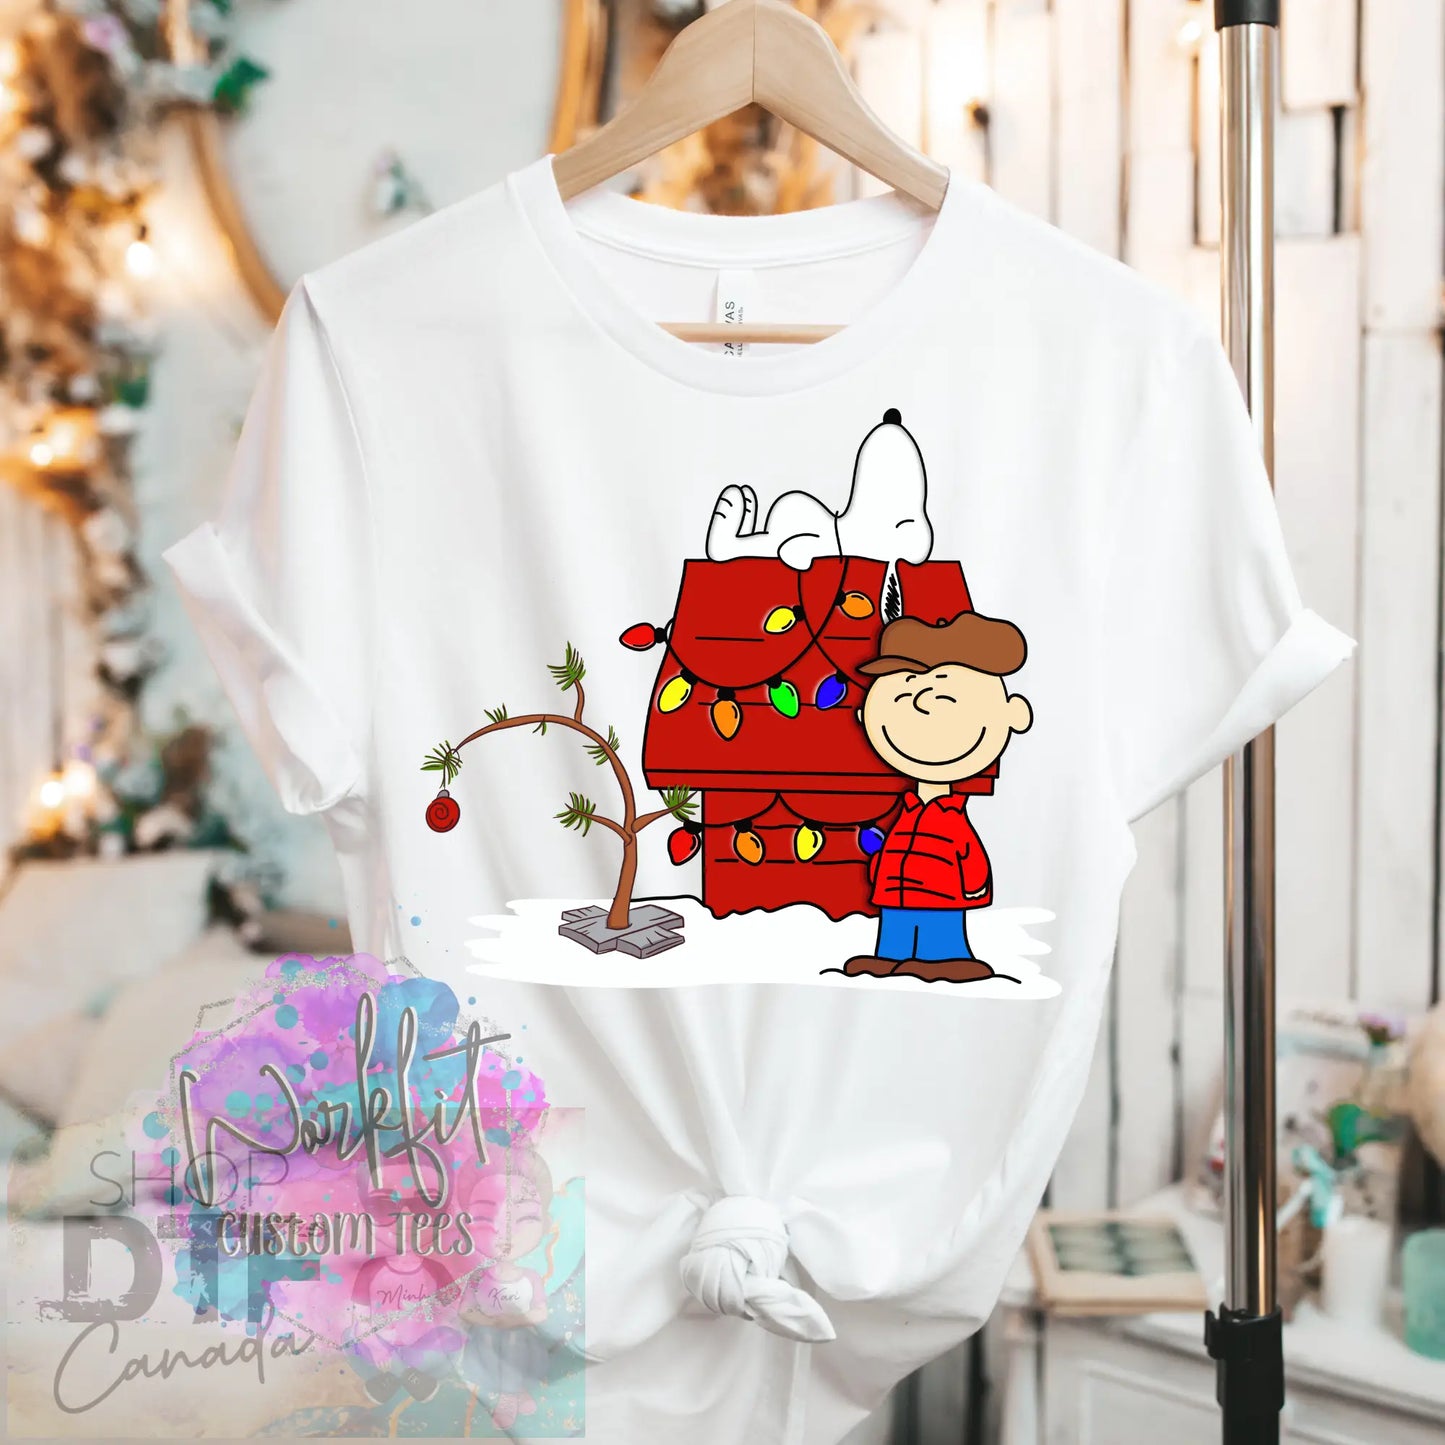 Christmas - Snoopy and Charlie - Shirts & Tops